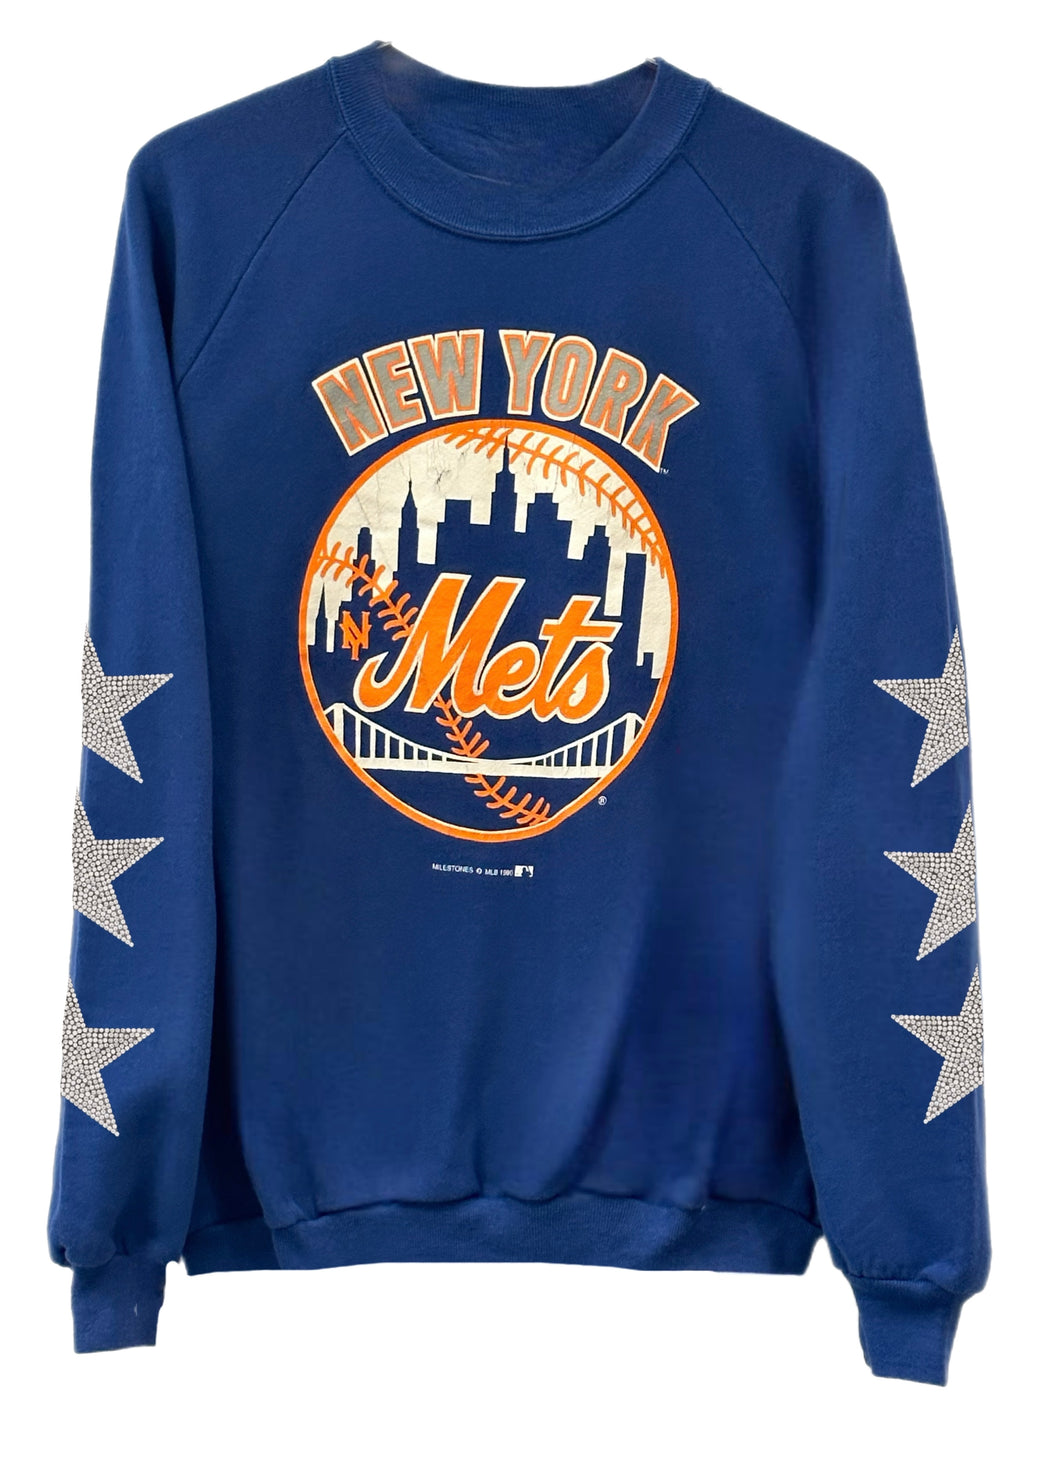 New York Mets, MLB One of a KIND Vintage Sweatshirt with Three Crystal Star Design